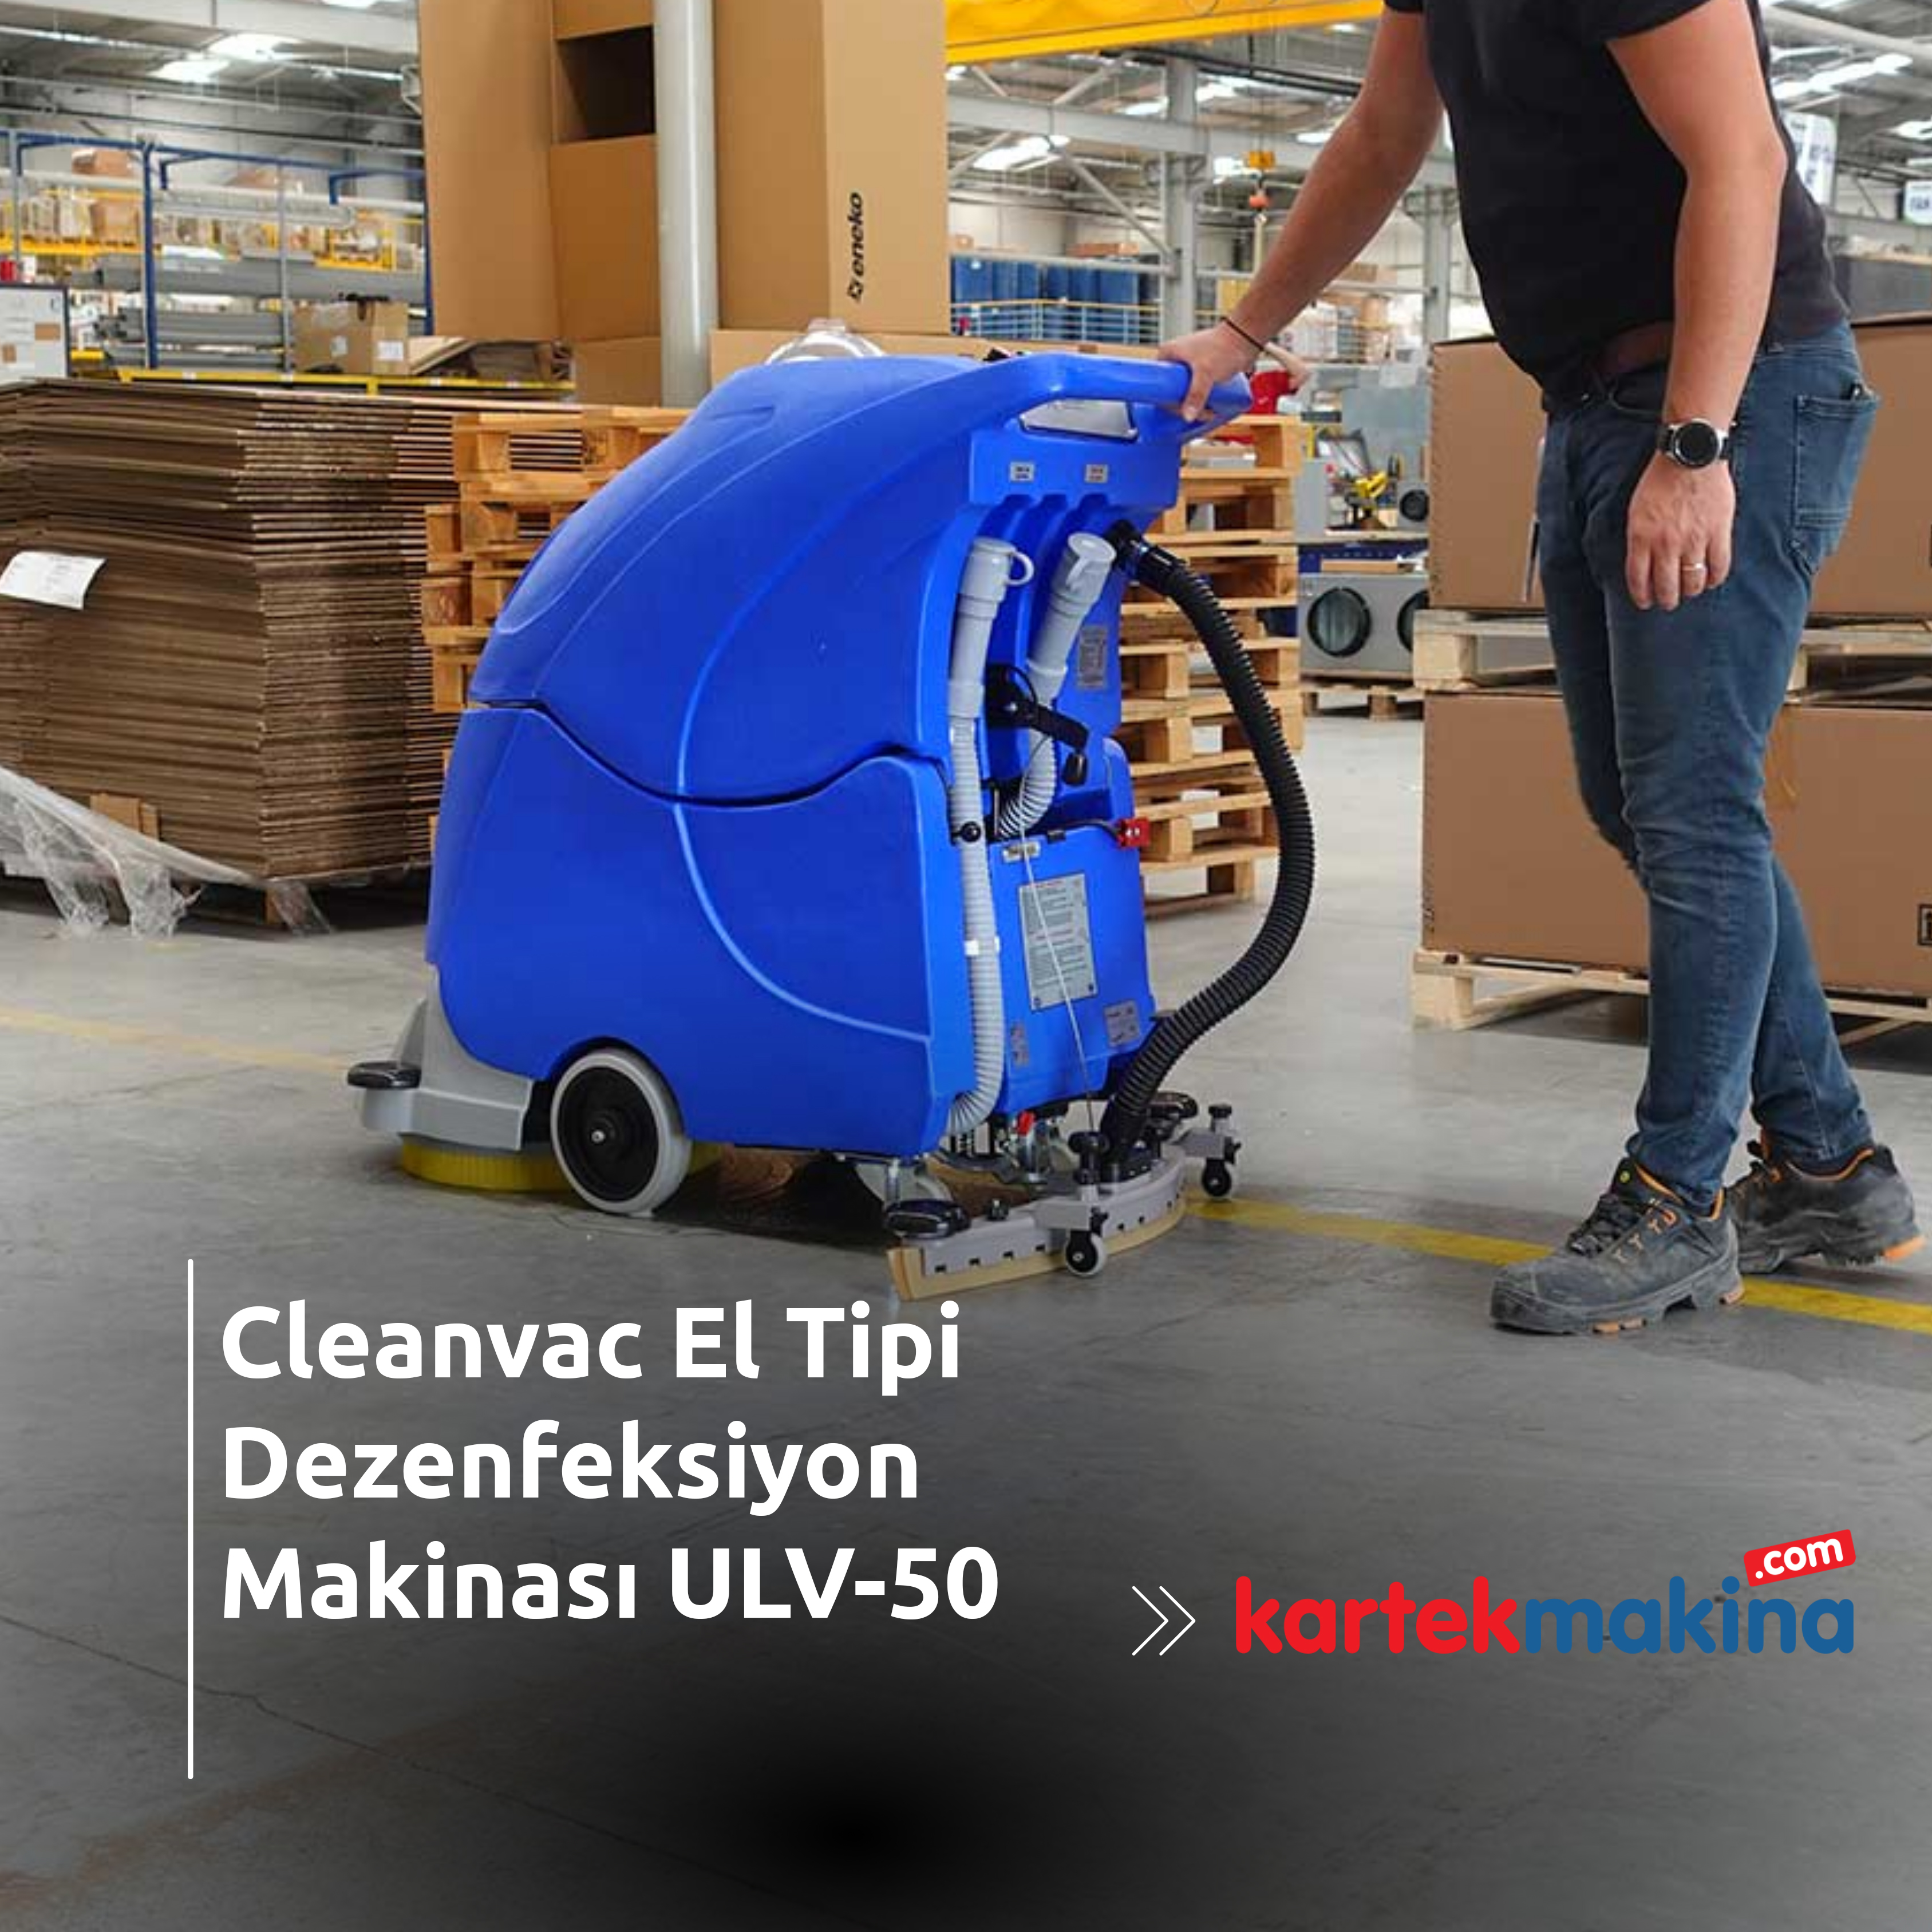 Cleanvac El Tipi Dezenfeksiyon Makinası ULV-50